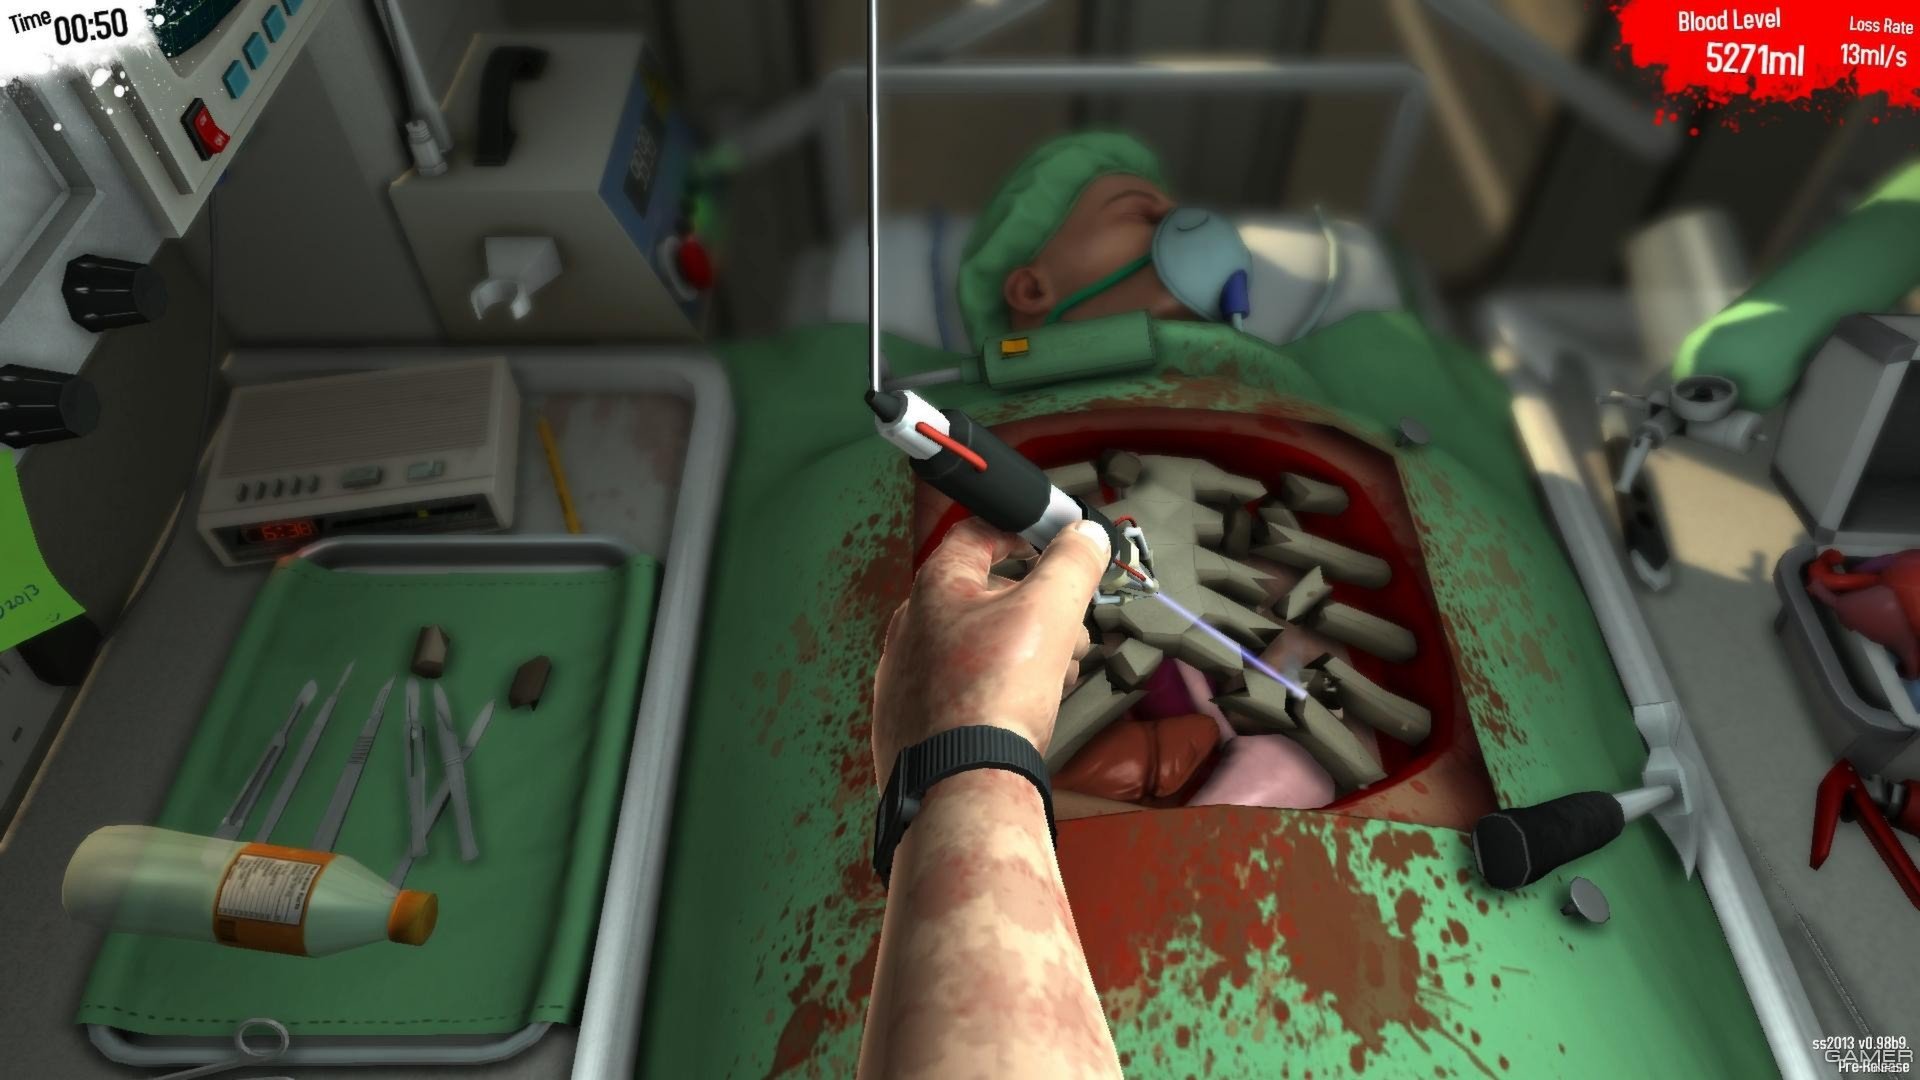 surgeon simulator free play no download